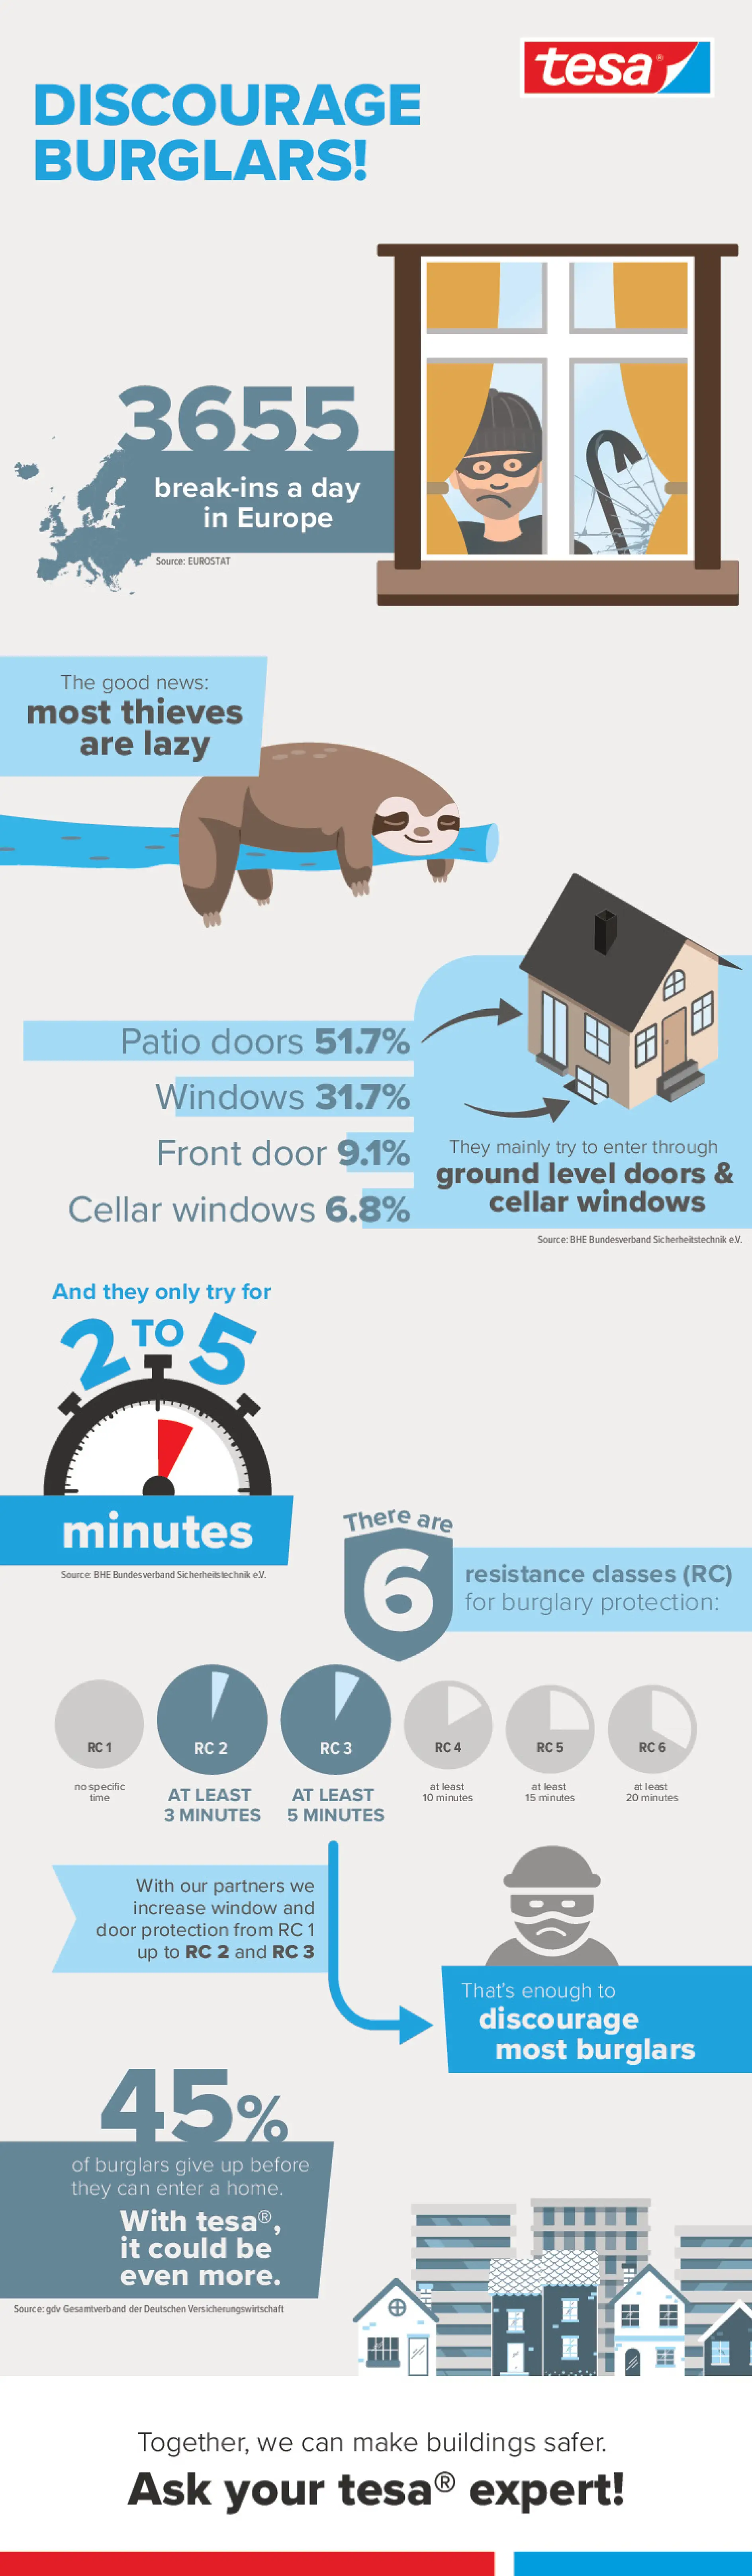 tesa_burglars-infographic_300dpi